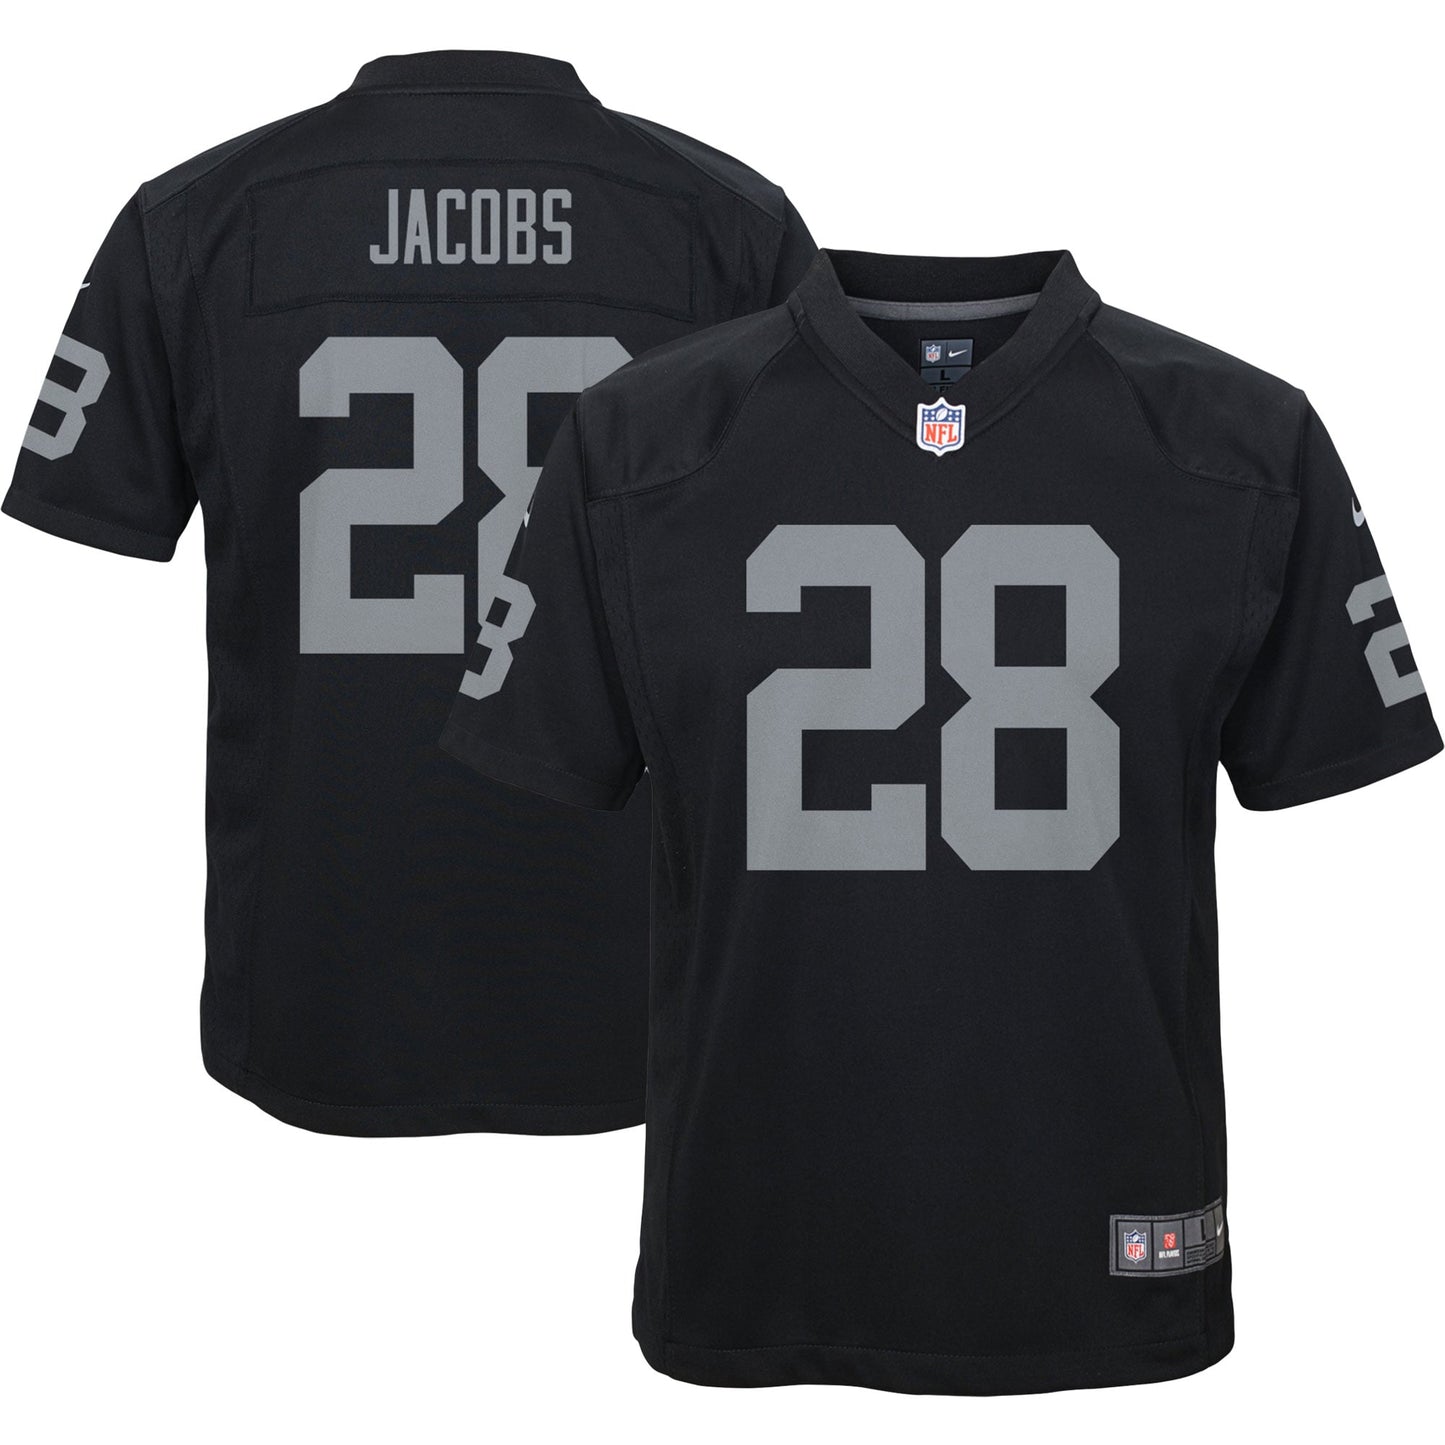 Josh Jacobs Las Vegas Raiders Nike Youth Game Jersey - Black